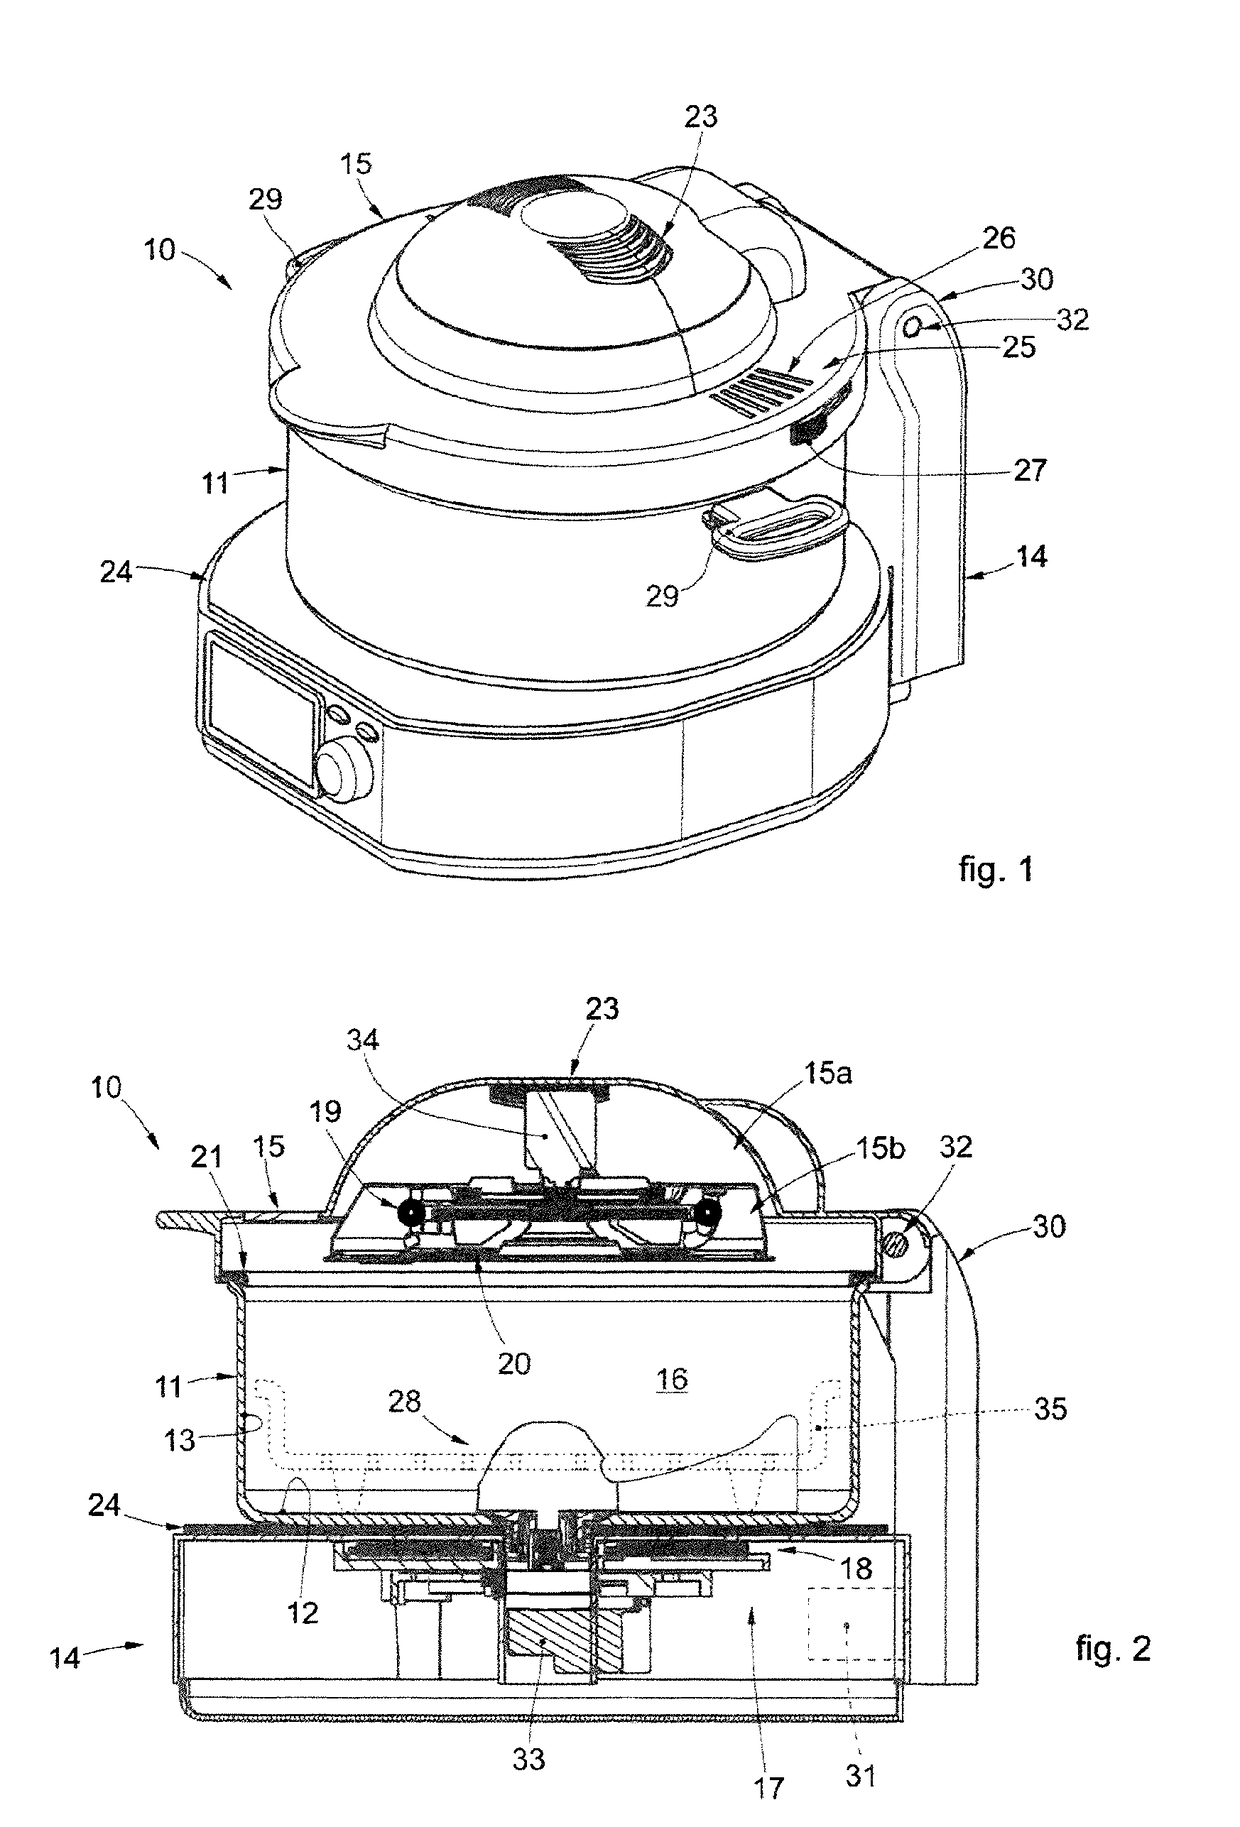 Autonomous apparatus for cooking food